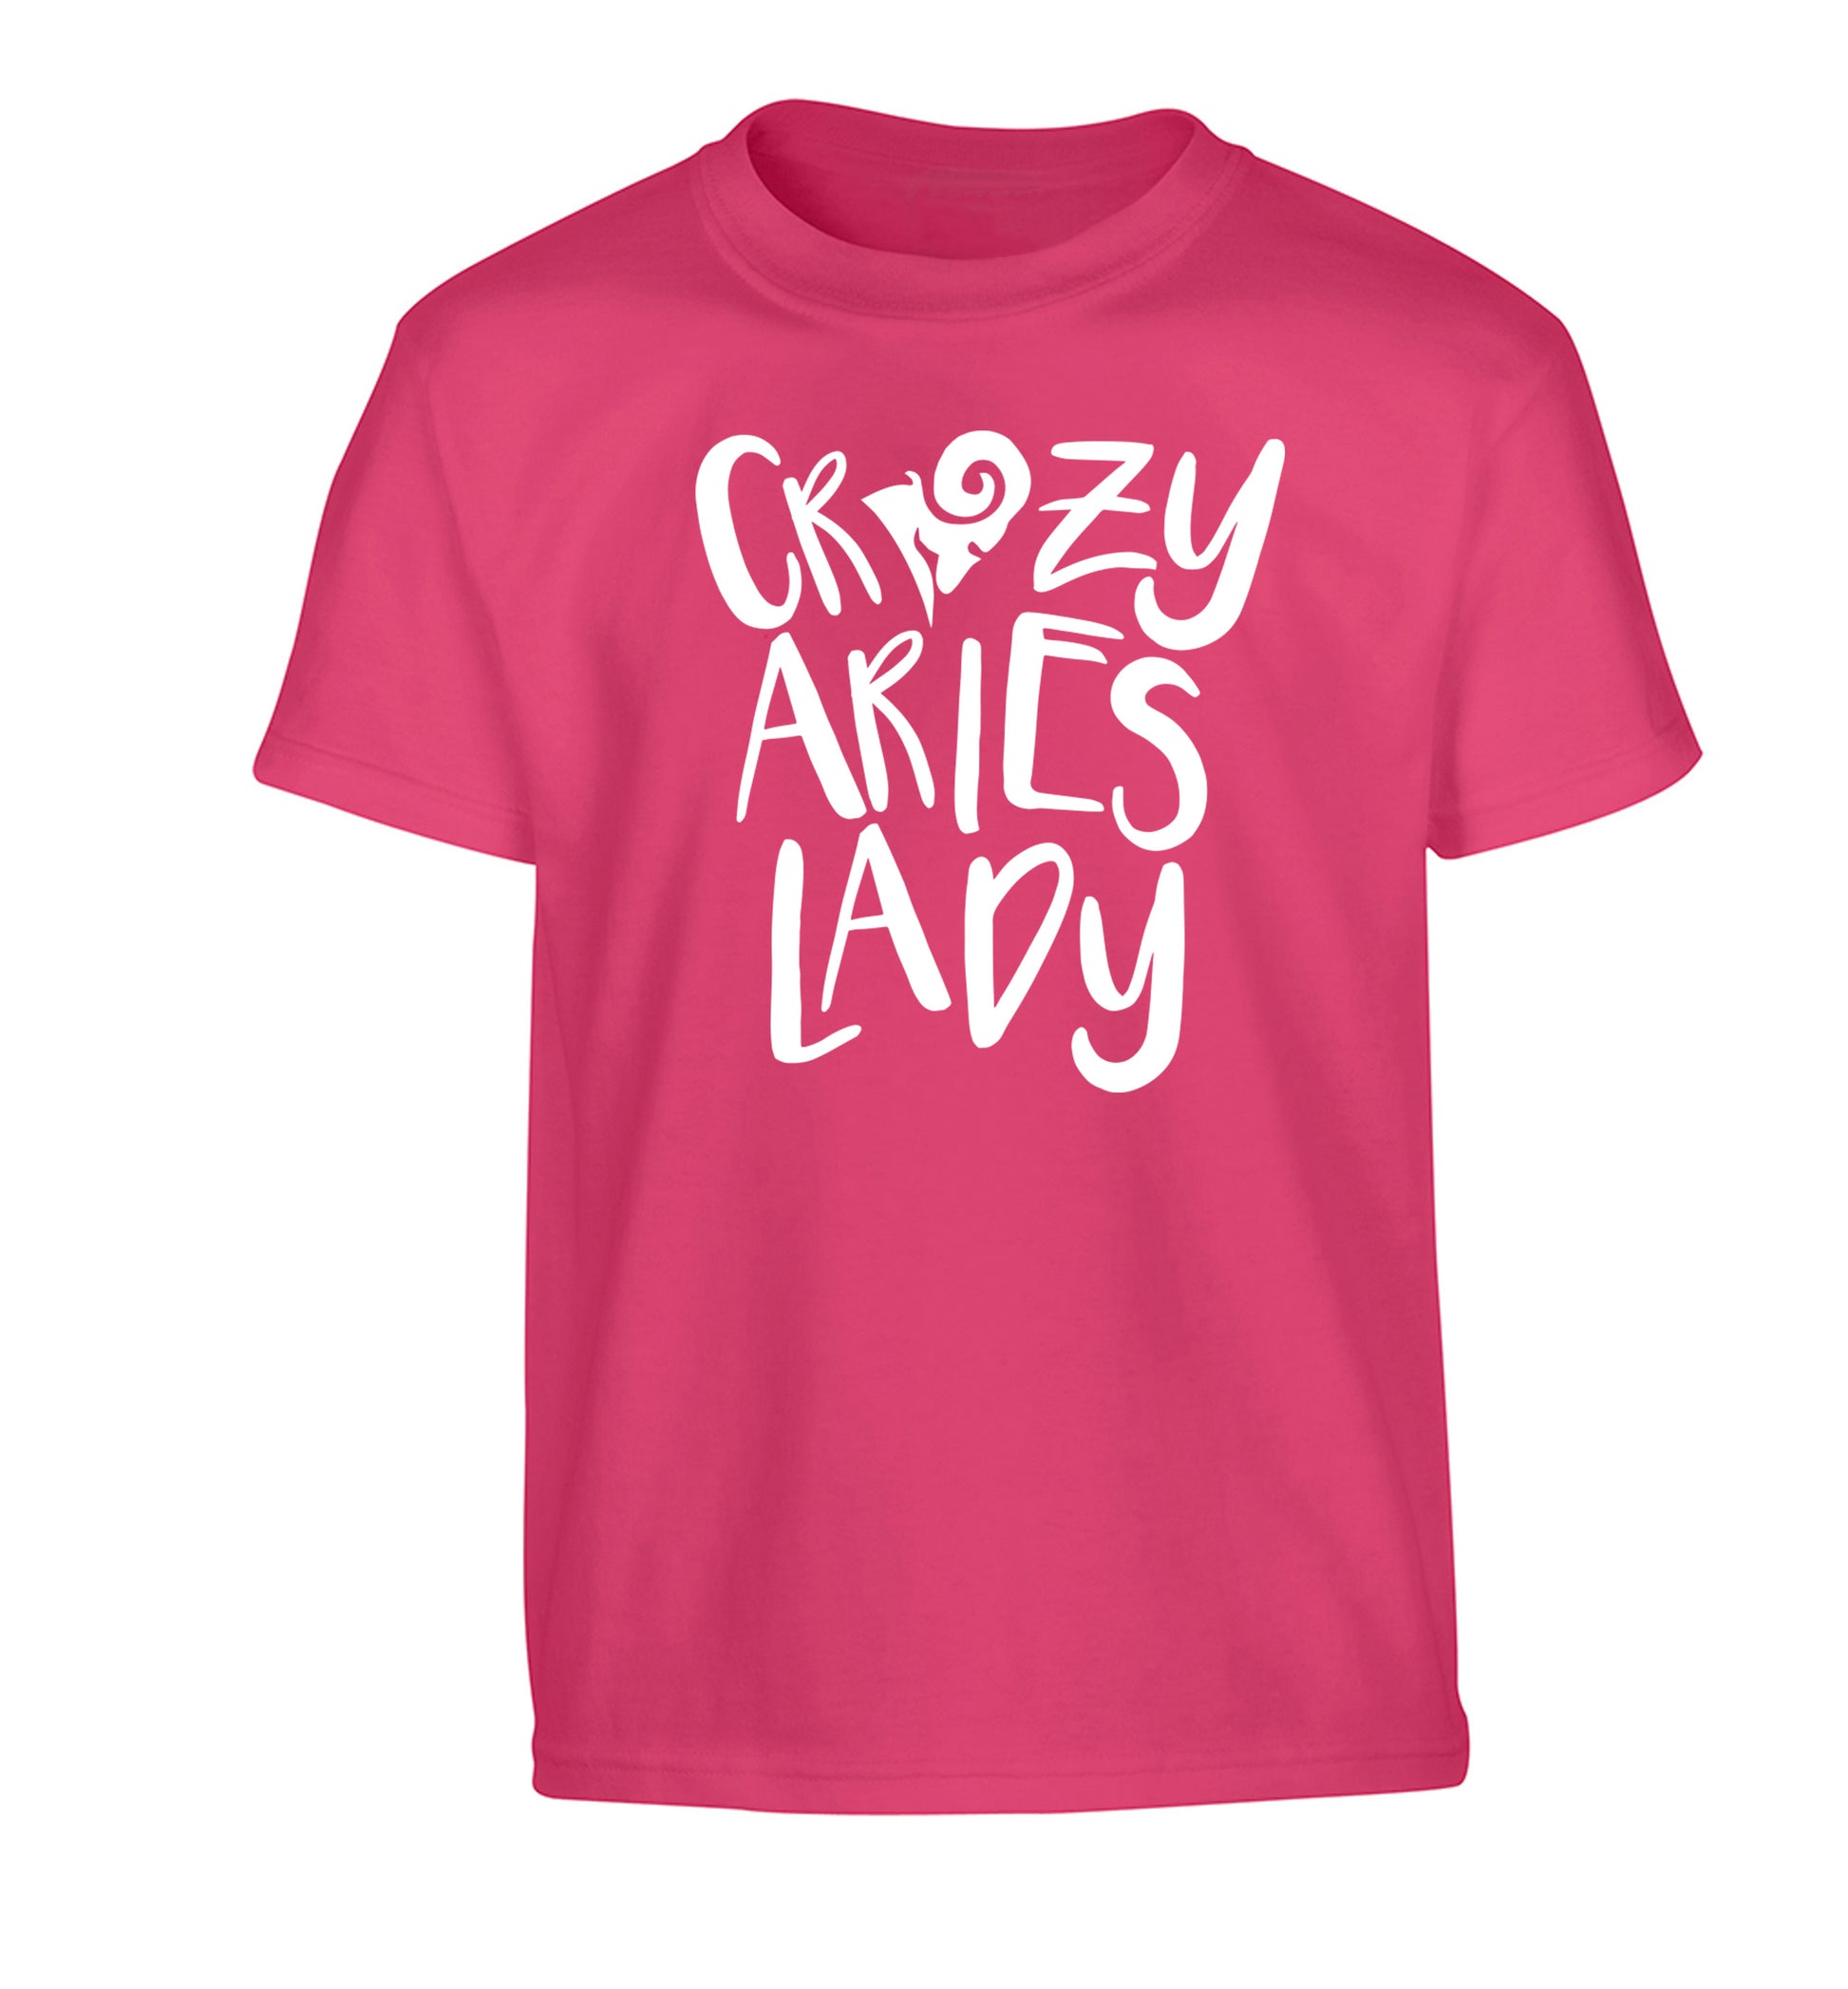 Crazy aries lady Children's pink Tshirt 12-13 Years